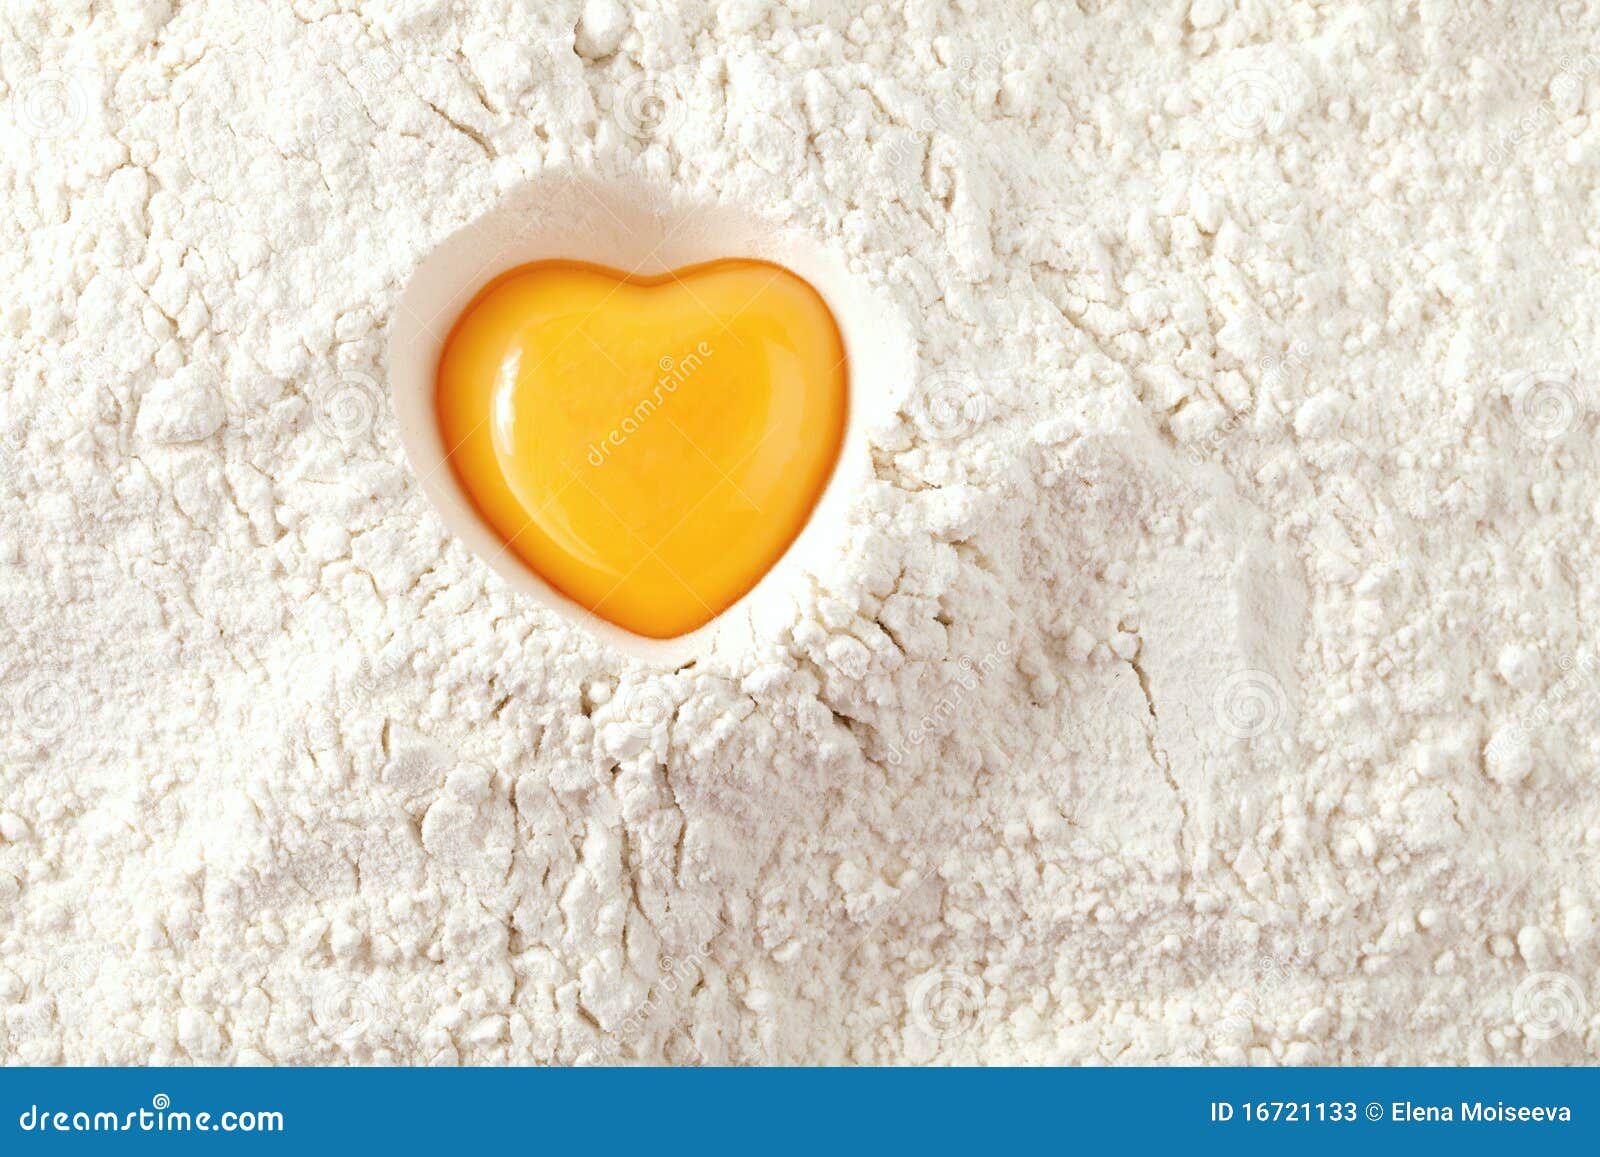 love to bake it! egg yolk on flour